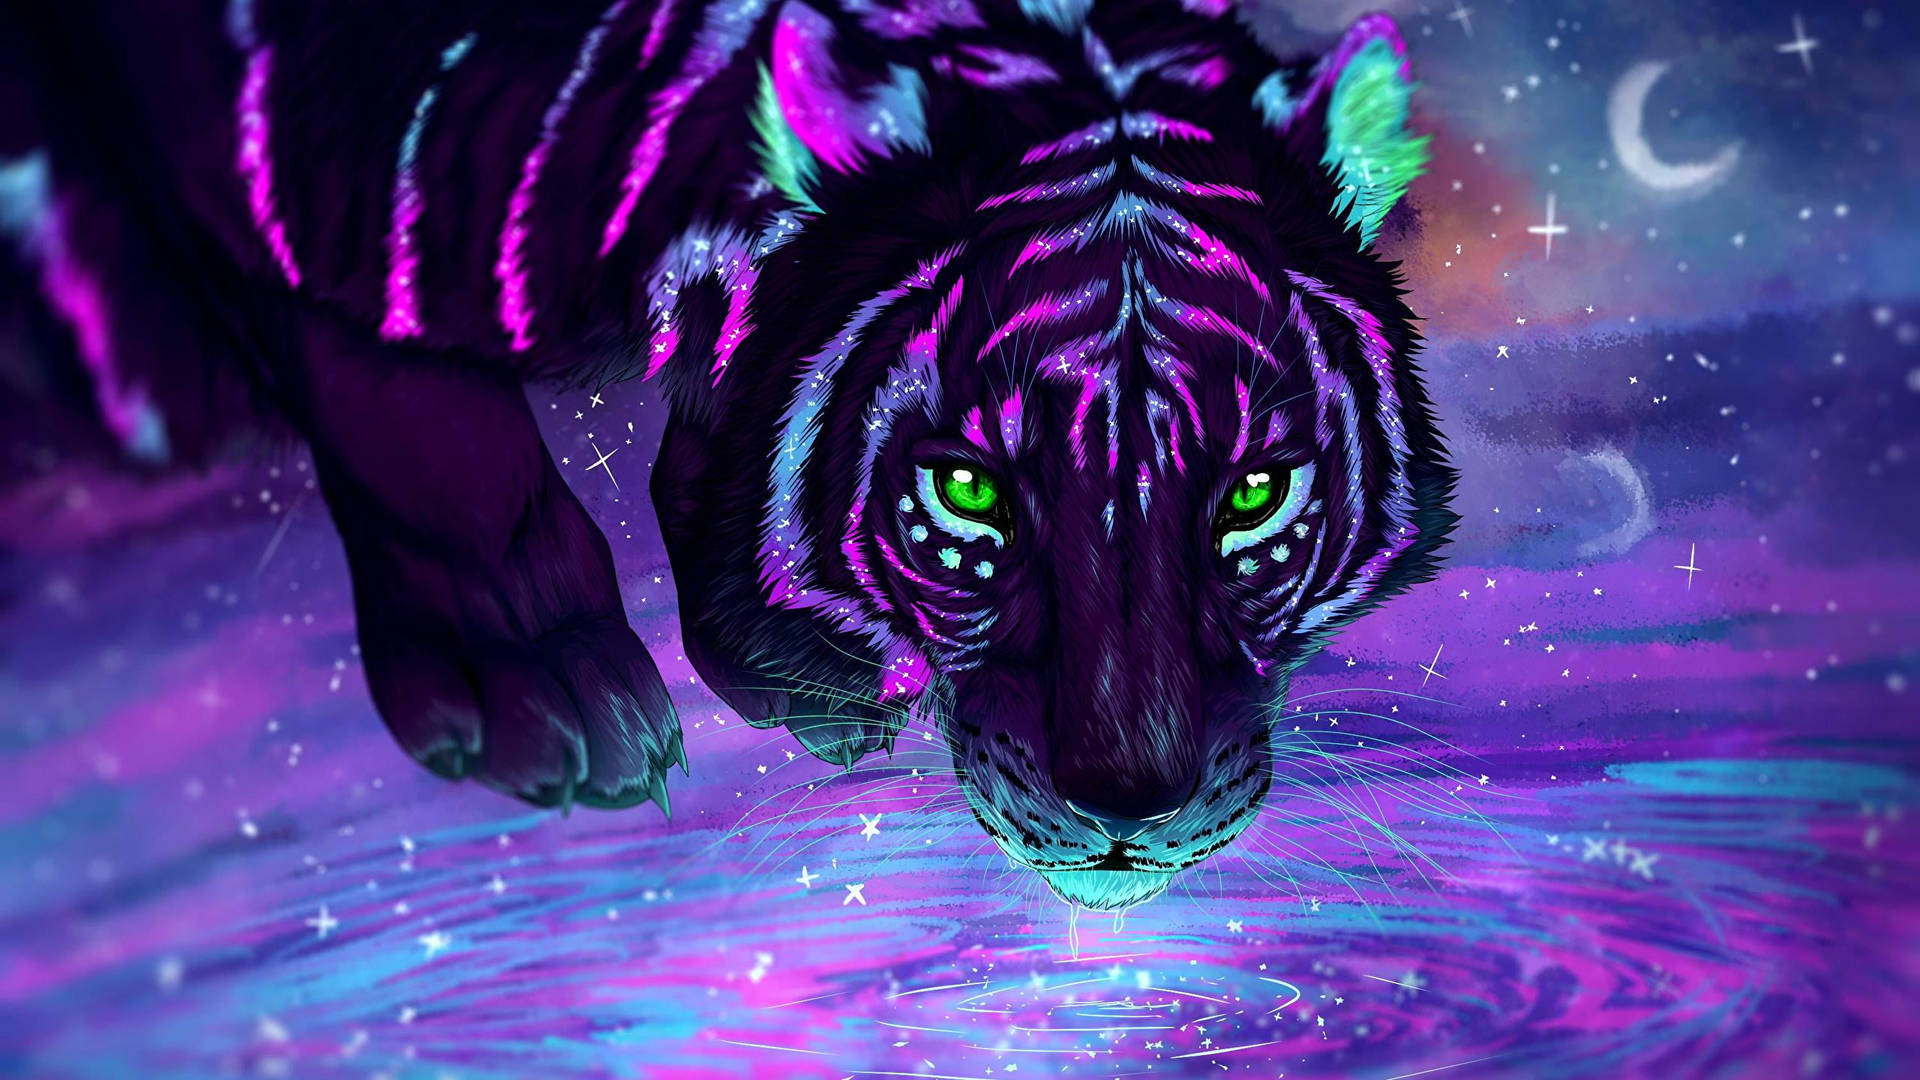 Tiger Artwork In Neon Aesthetic